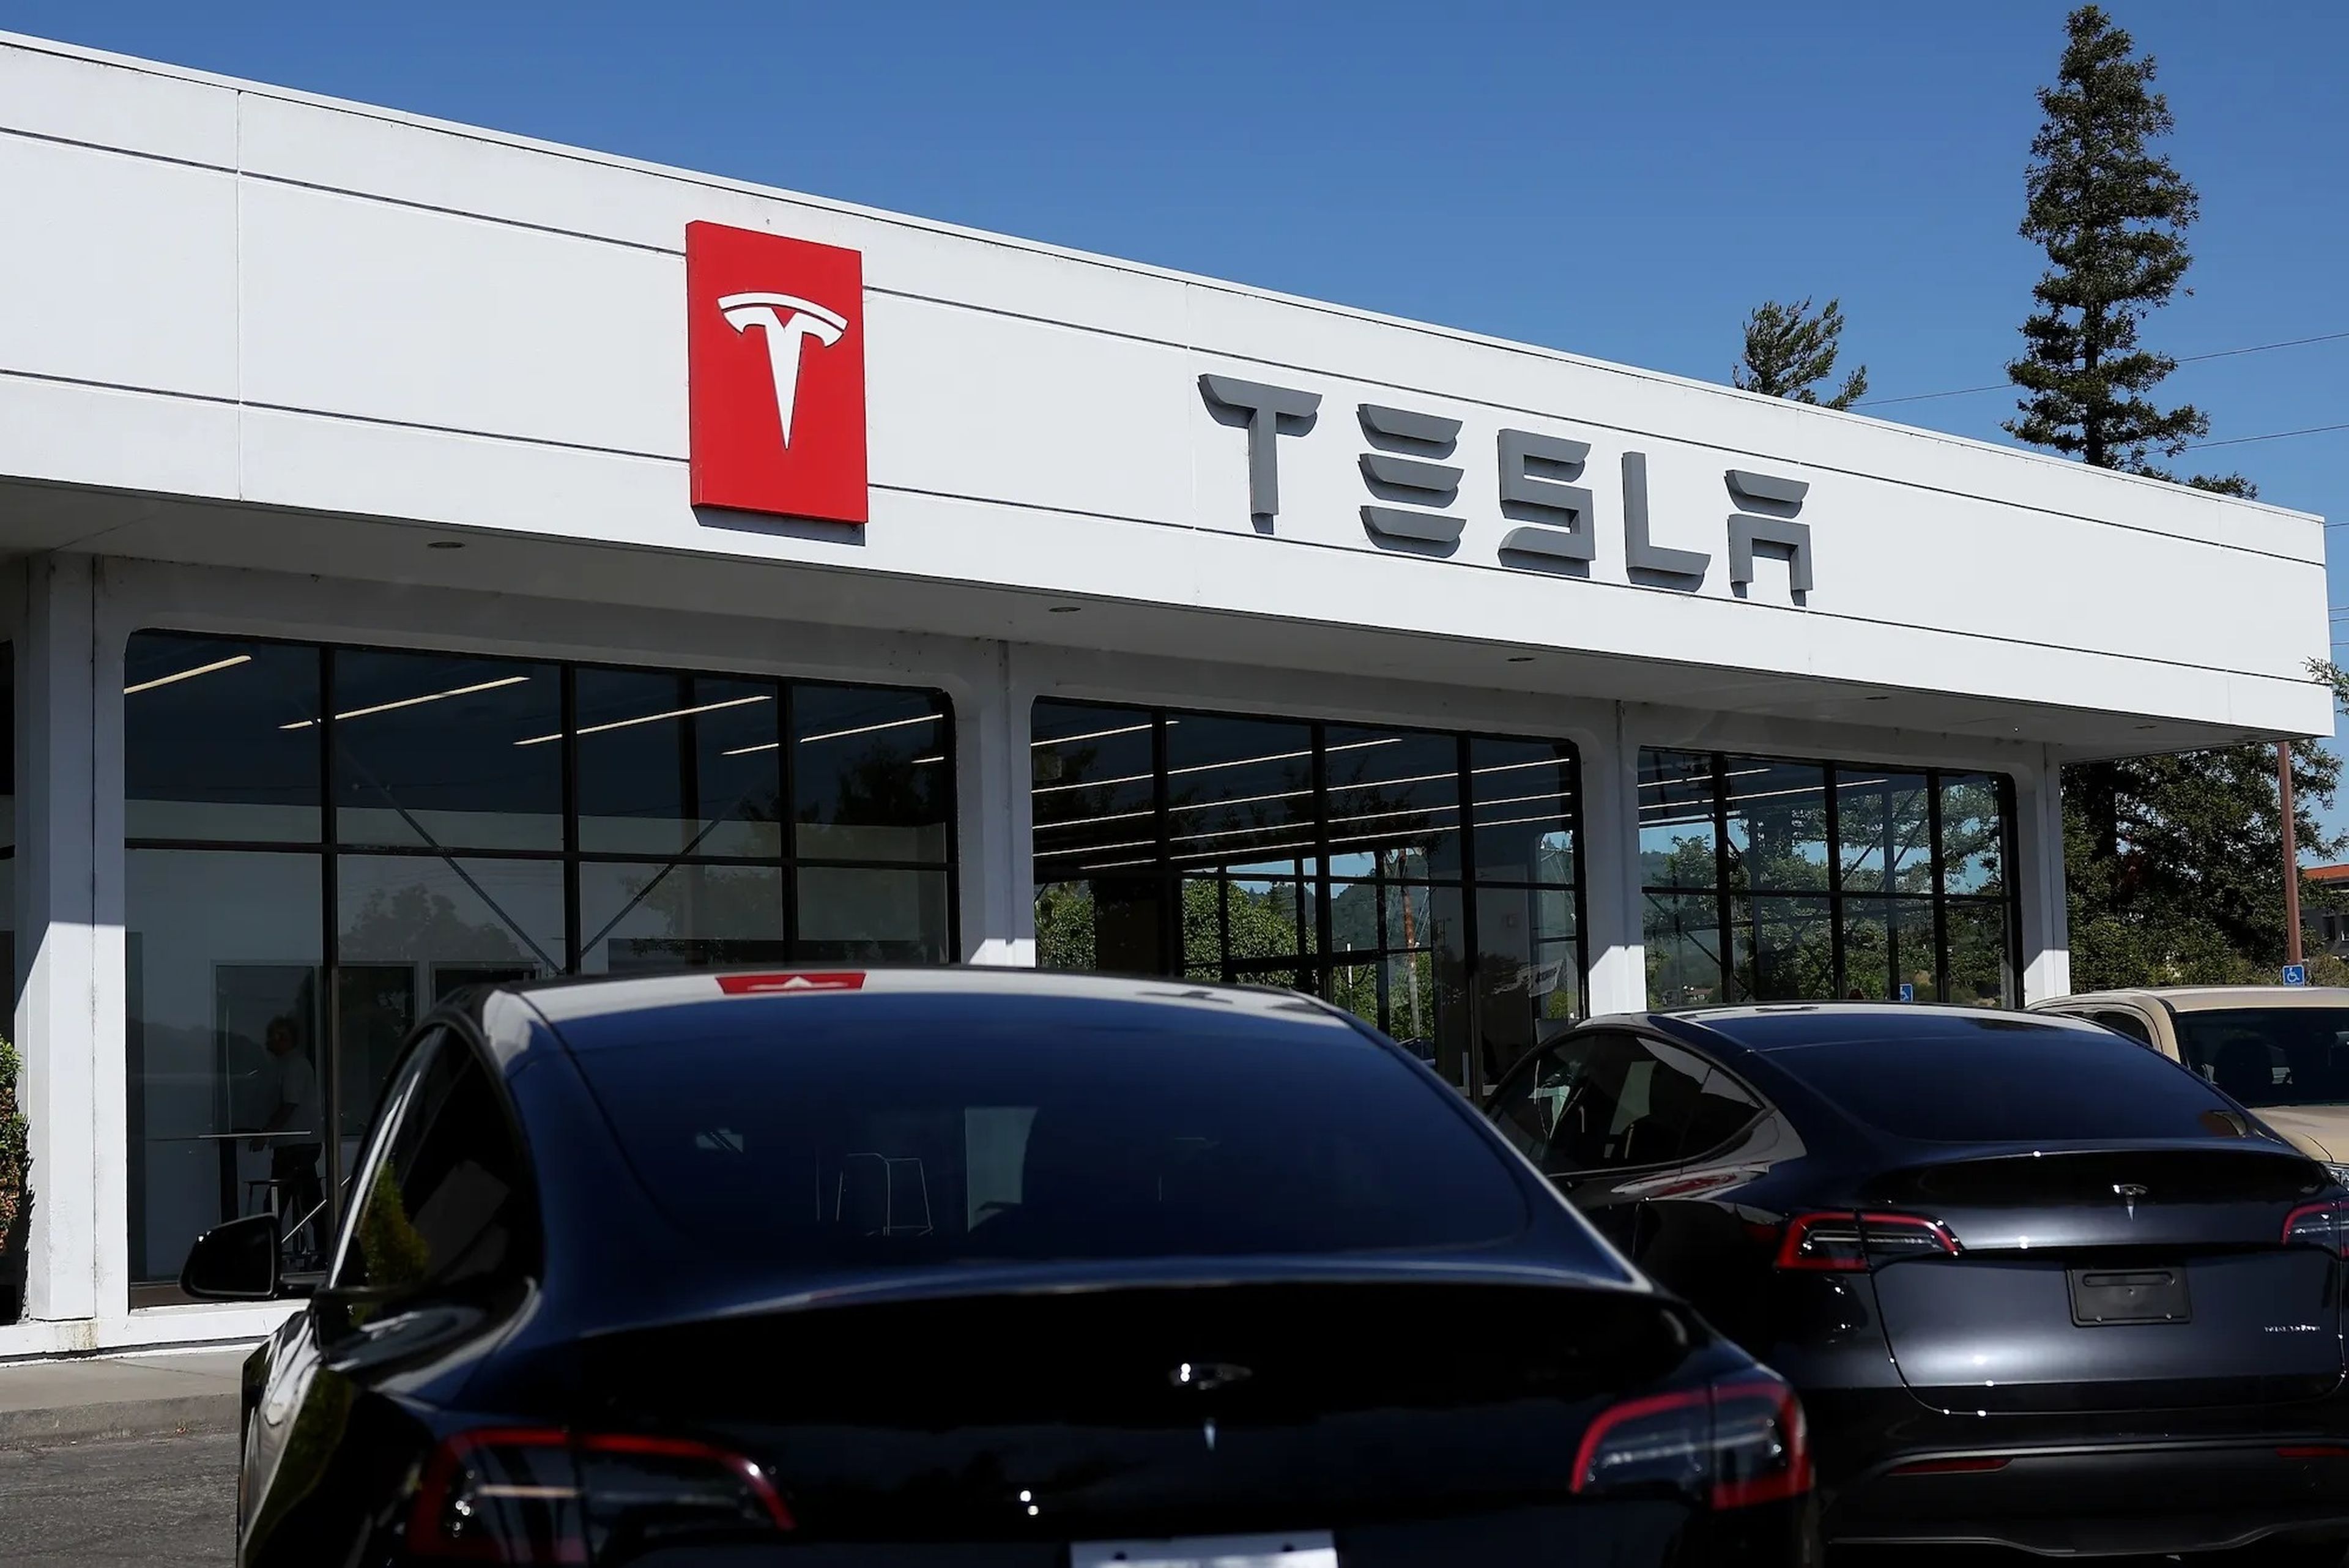 Brand new Tesla vehicles are parked outside a Tesla dealership.